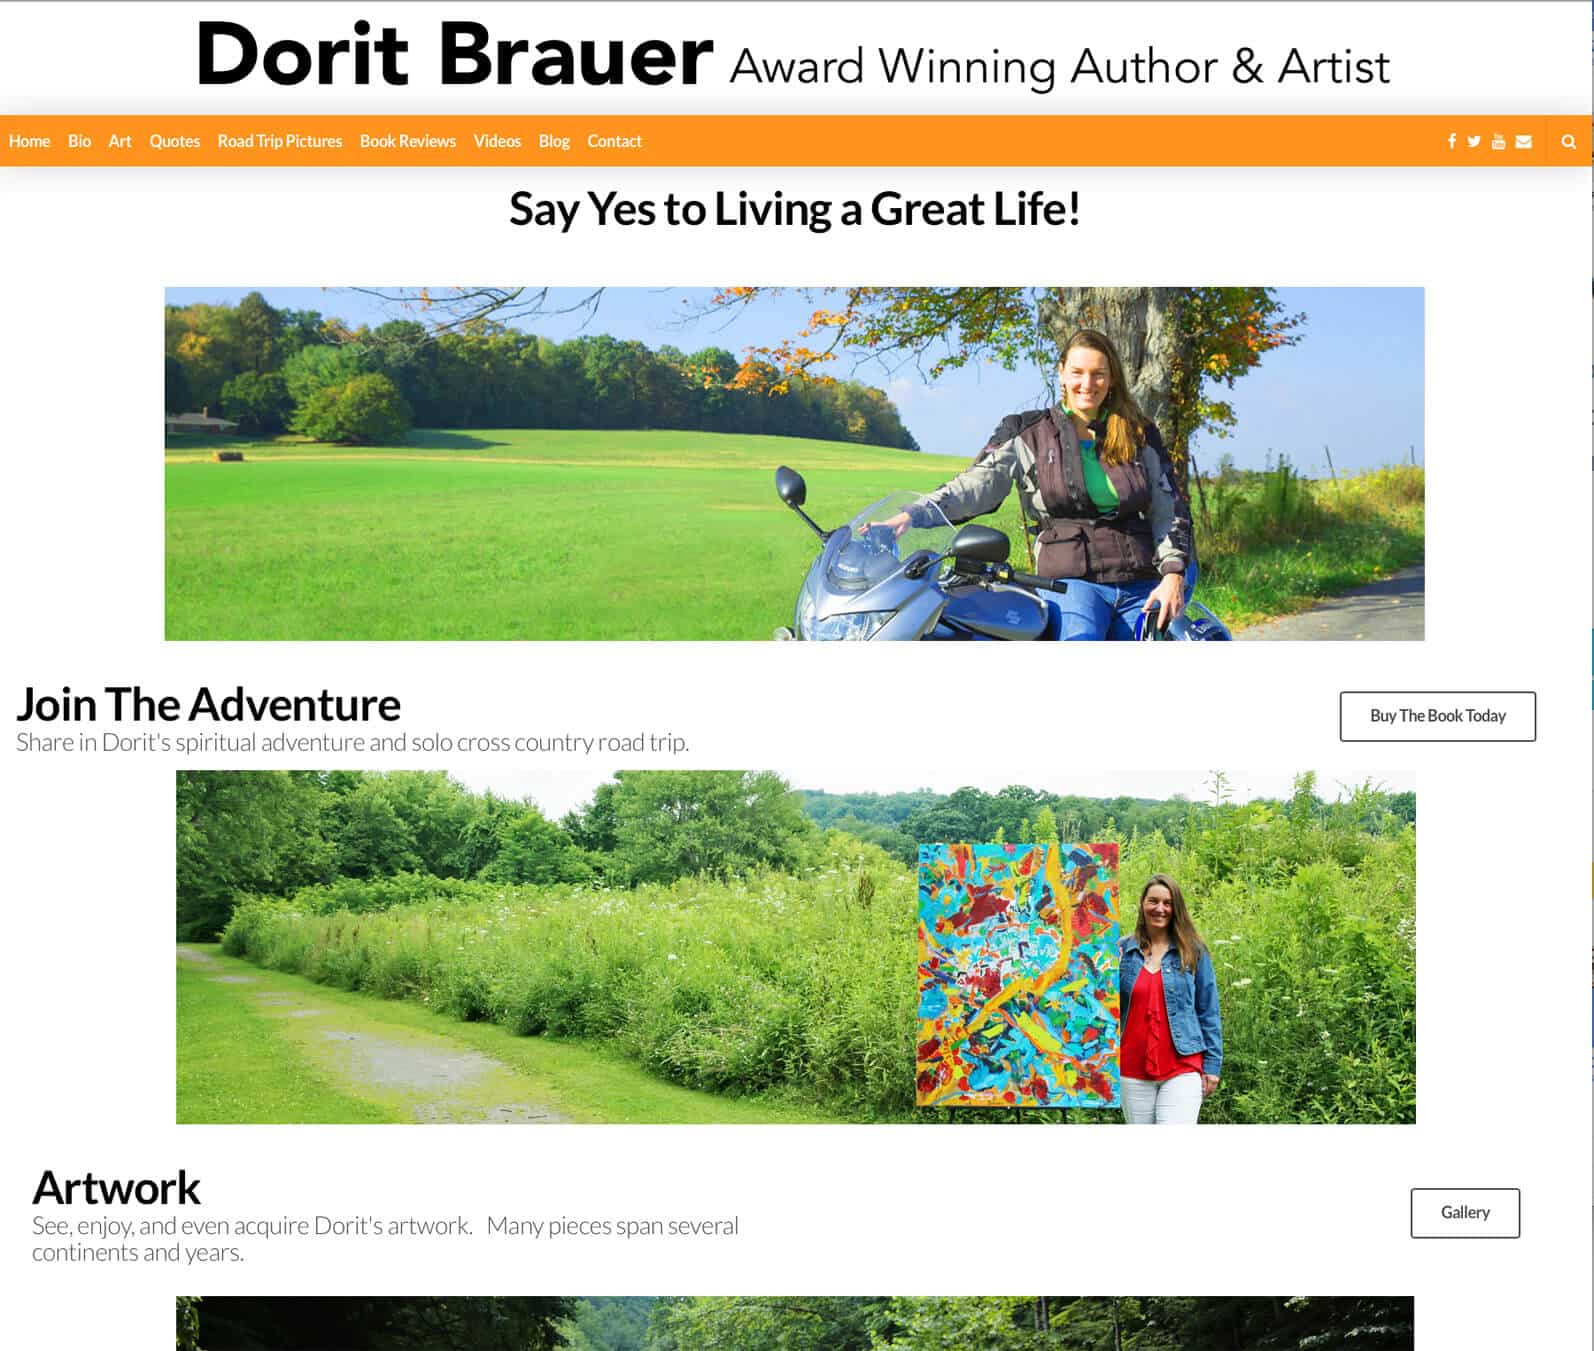 DoritBrauer.com Website design and developed by Josh Meeder of Great Things LLC